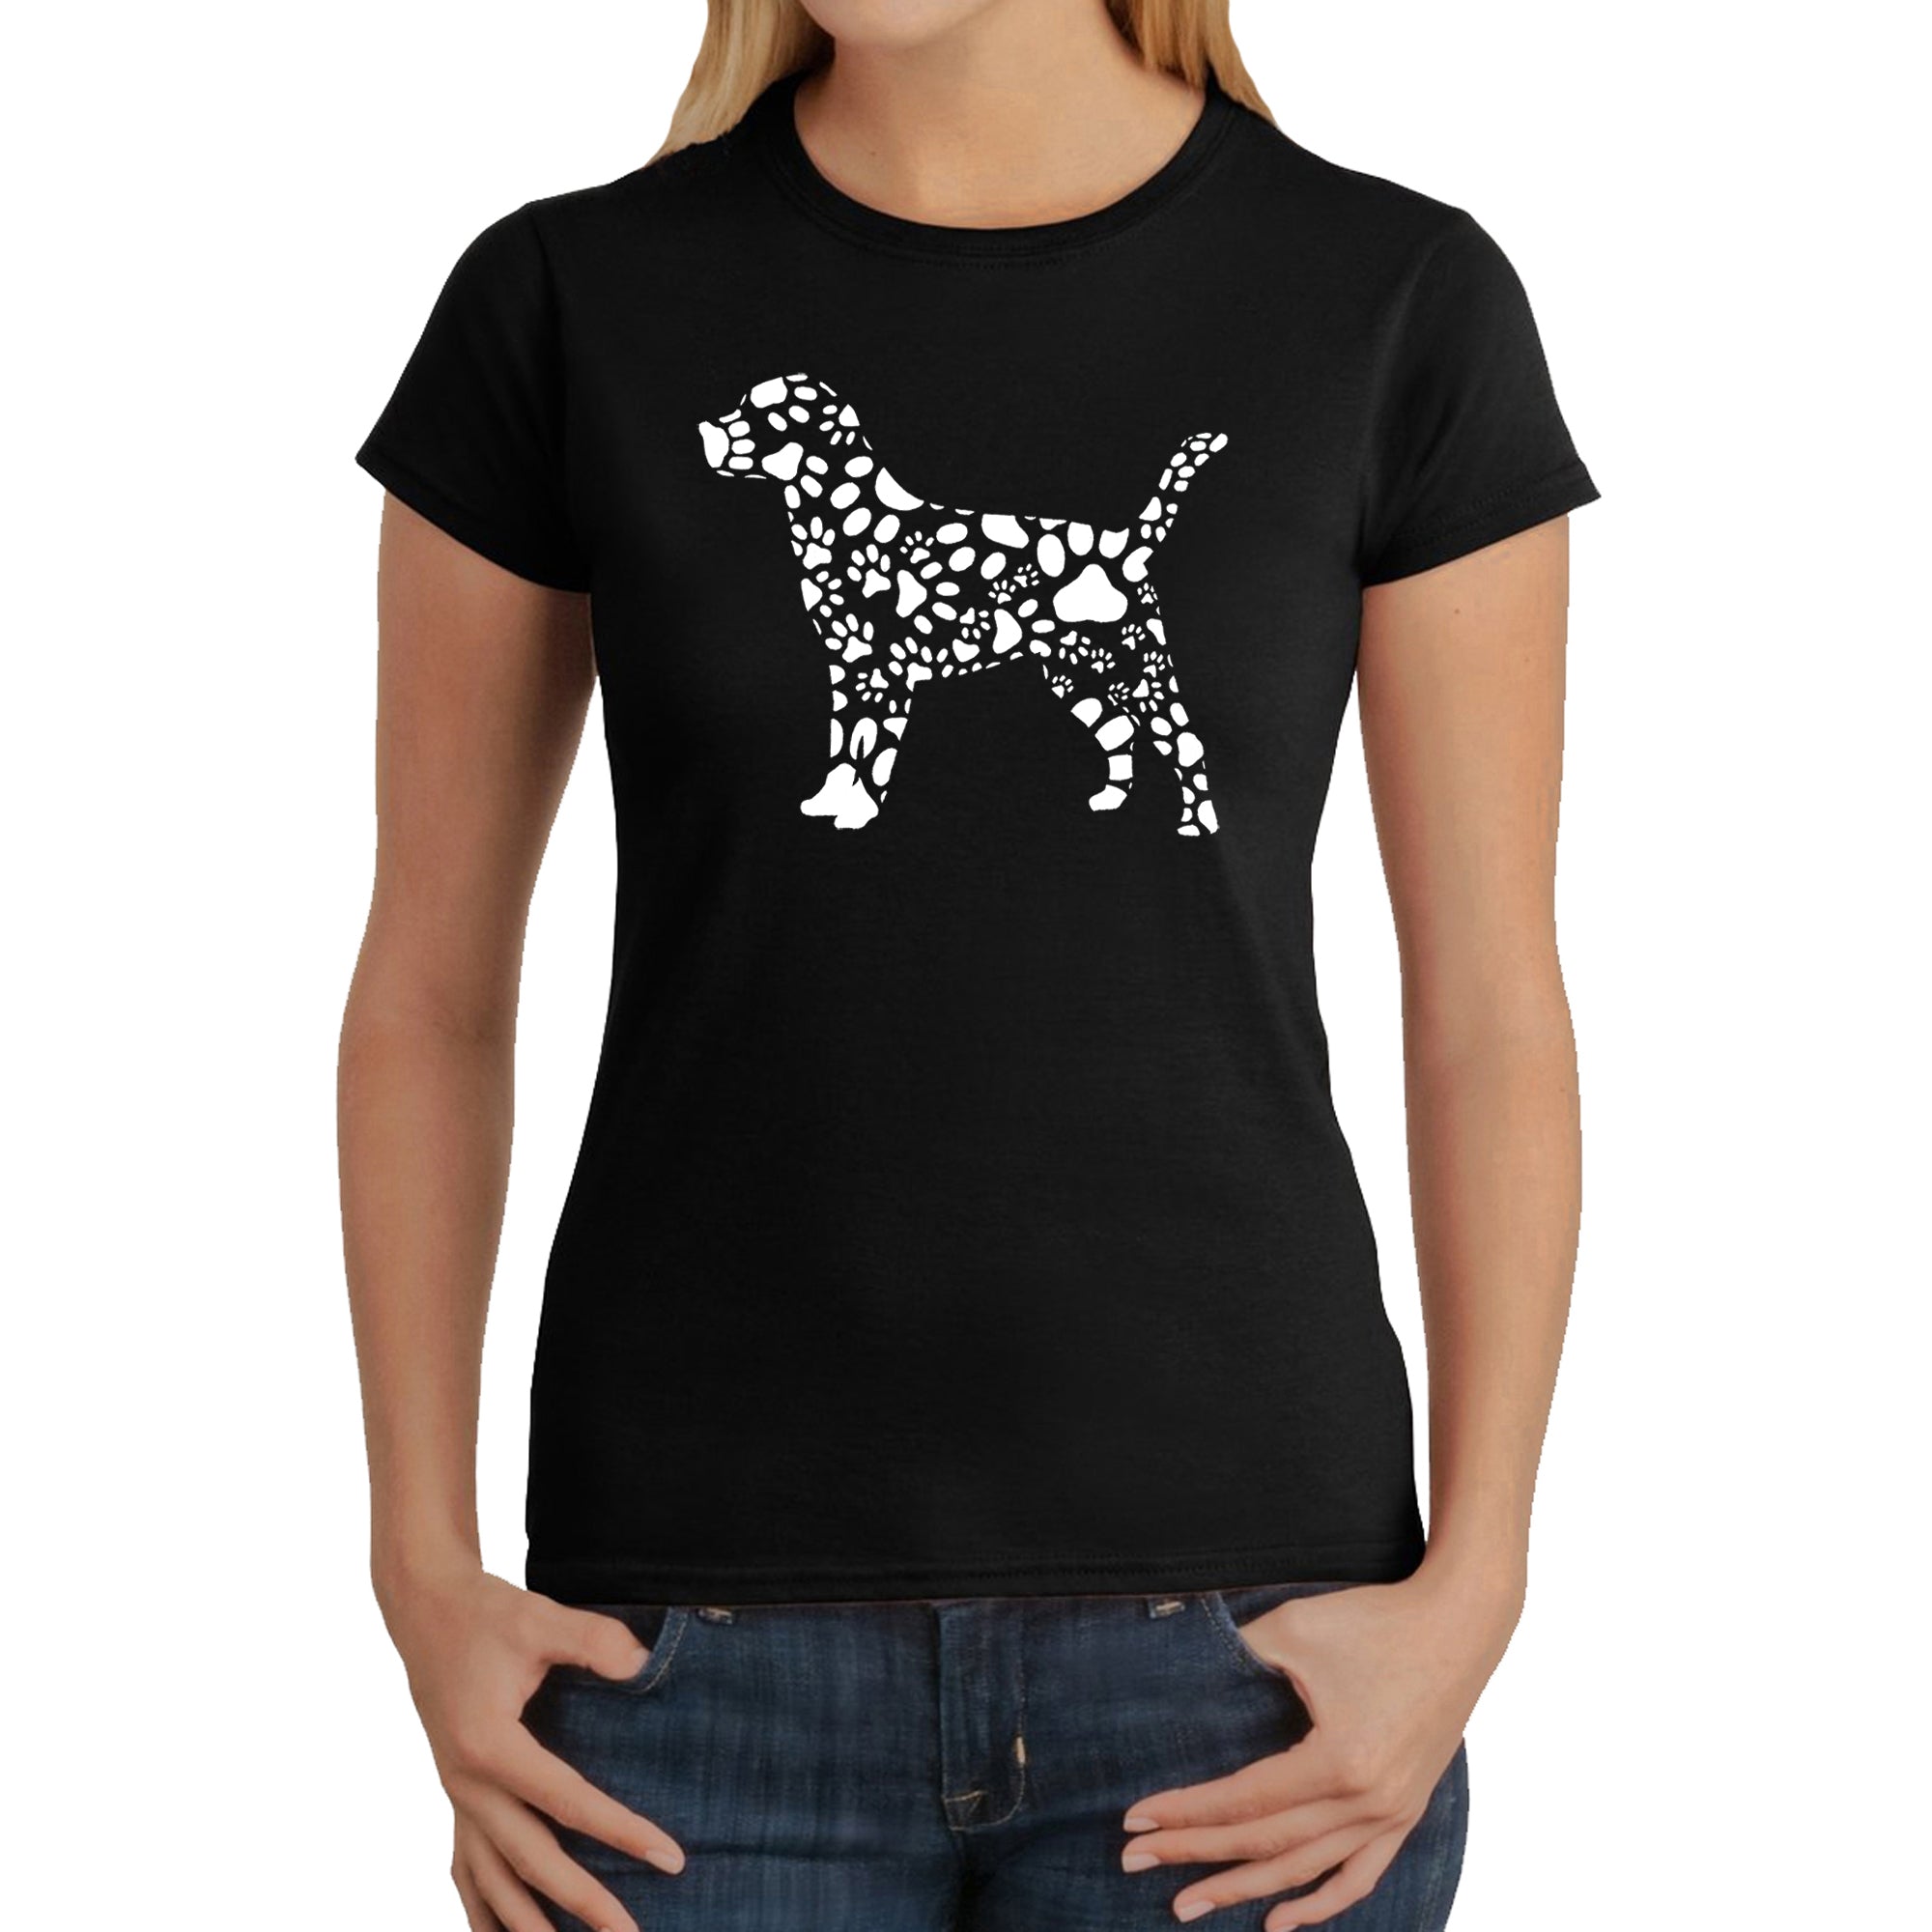 Dog Paw Prints - Women's Word Art T-Shirt - Navy - Large